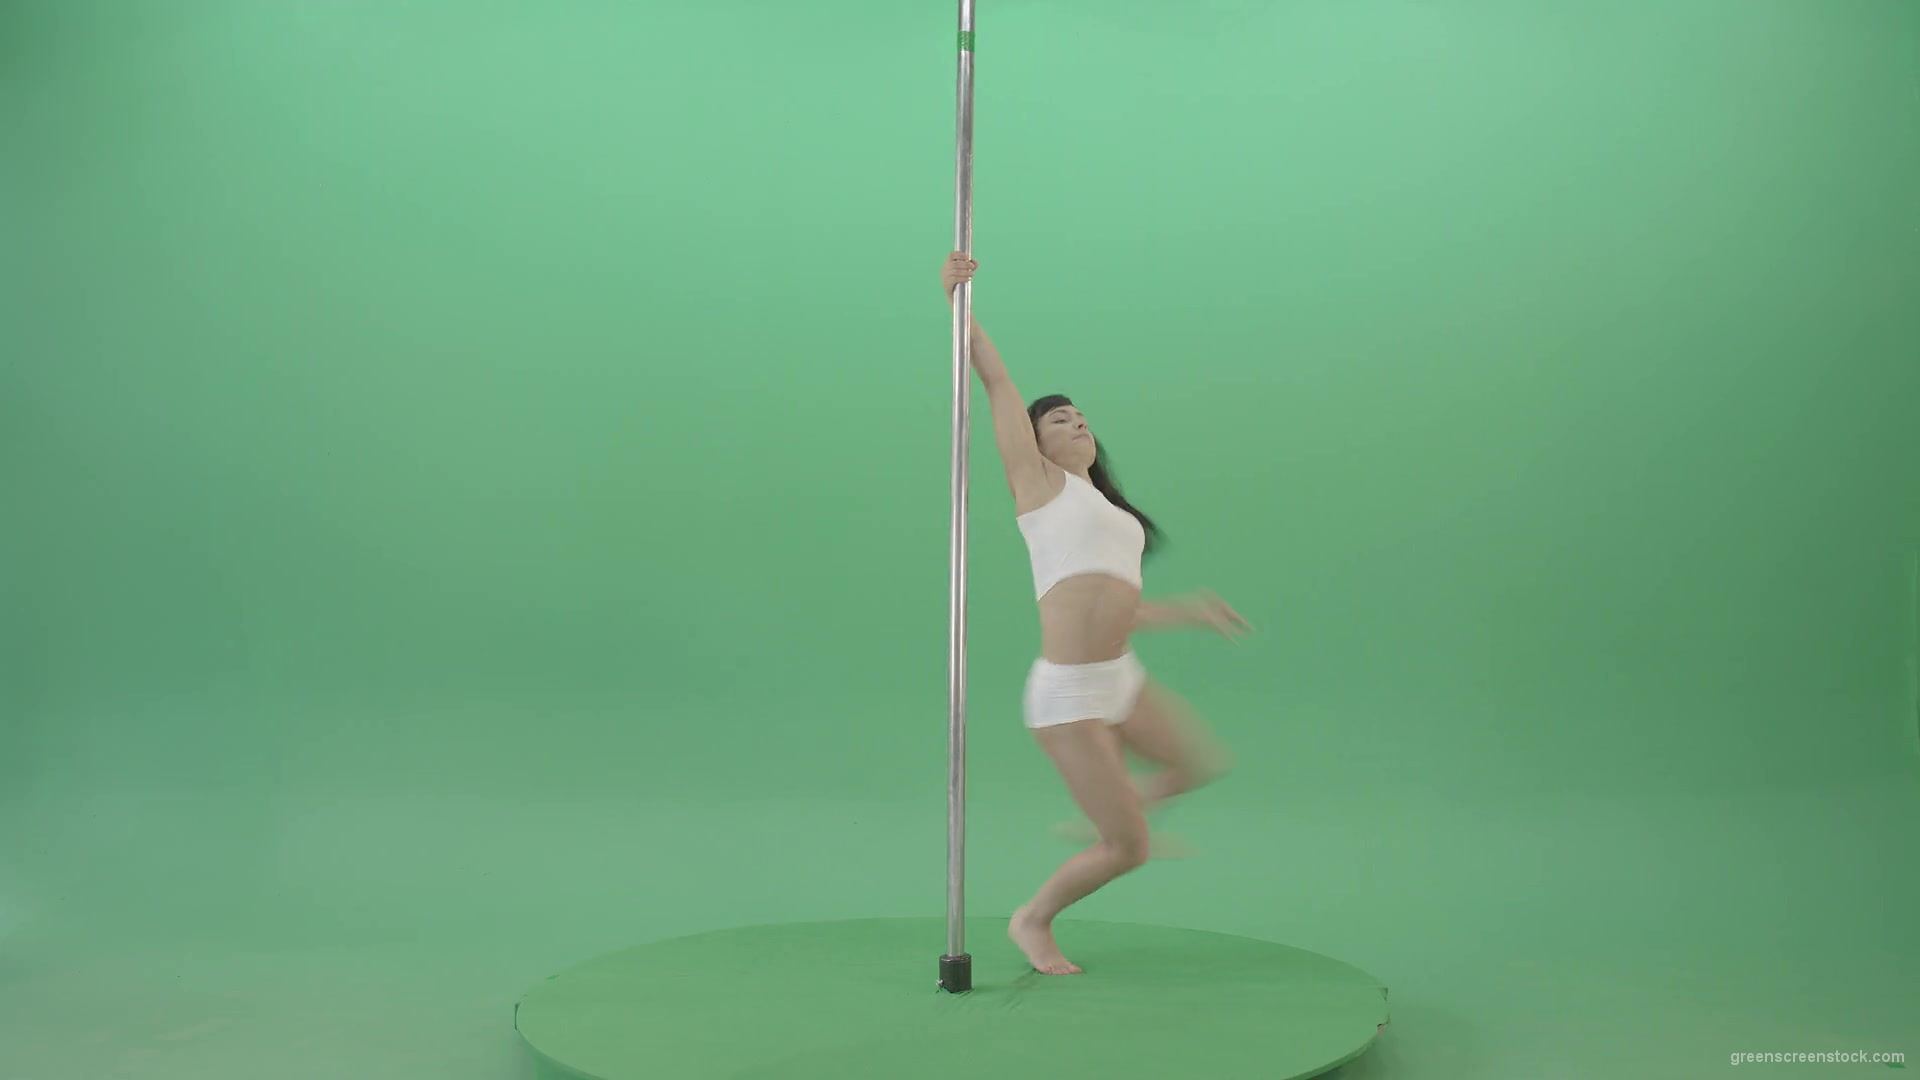 vj video background Acrobatic-gymnastics-making-spin-element-on-Pole-Pilon-on-green-screen-4K-Video-Footage-1920_003